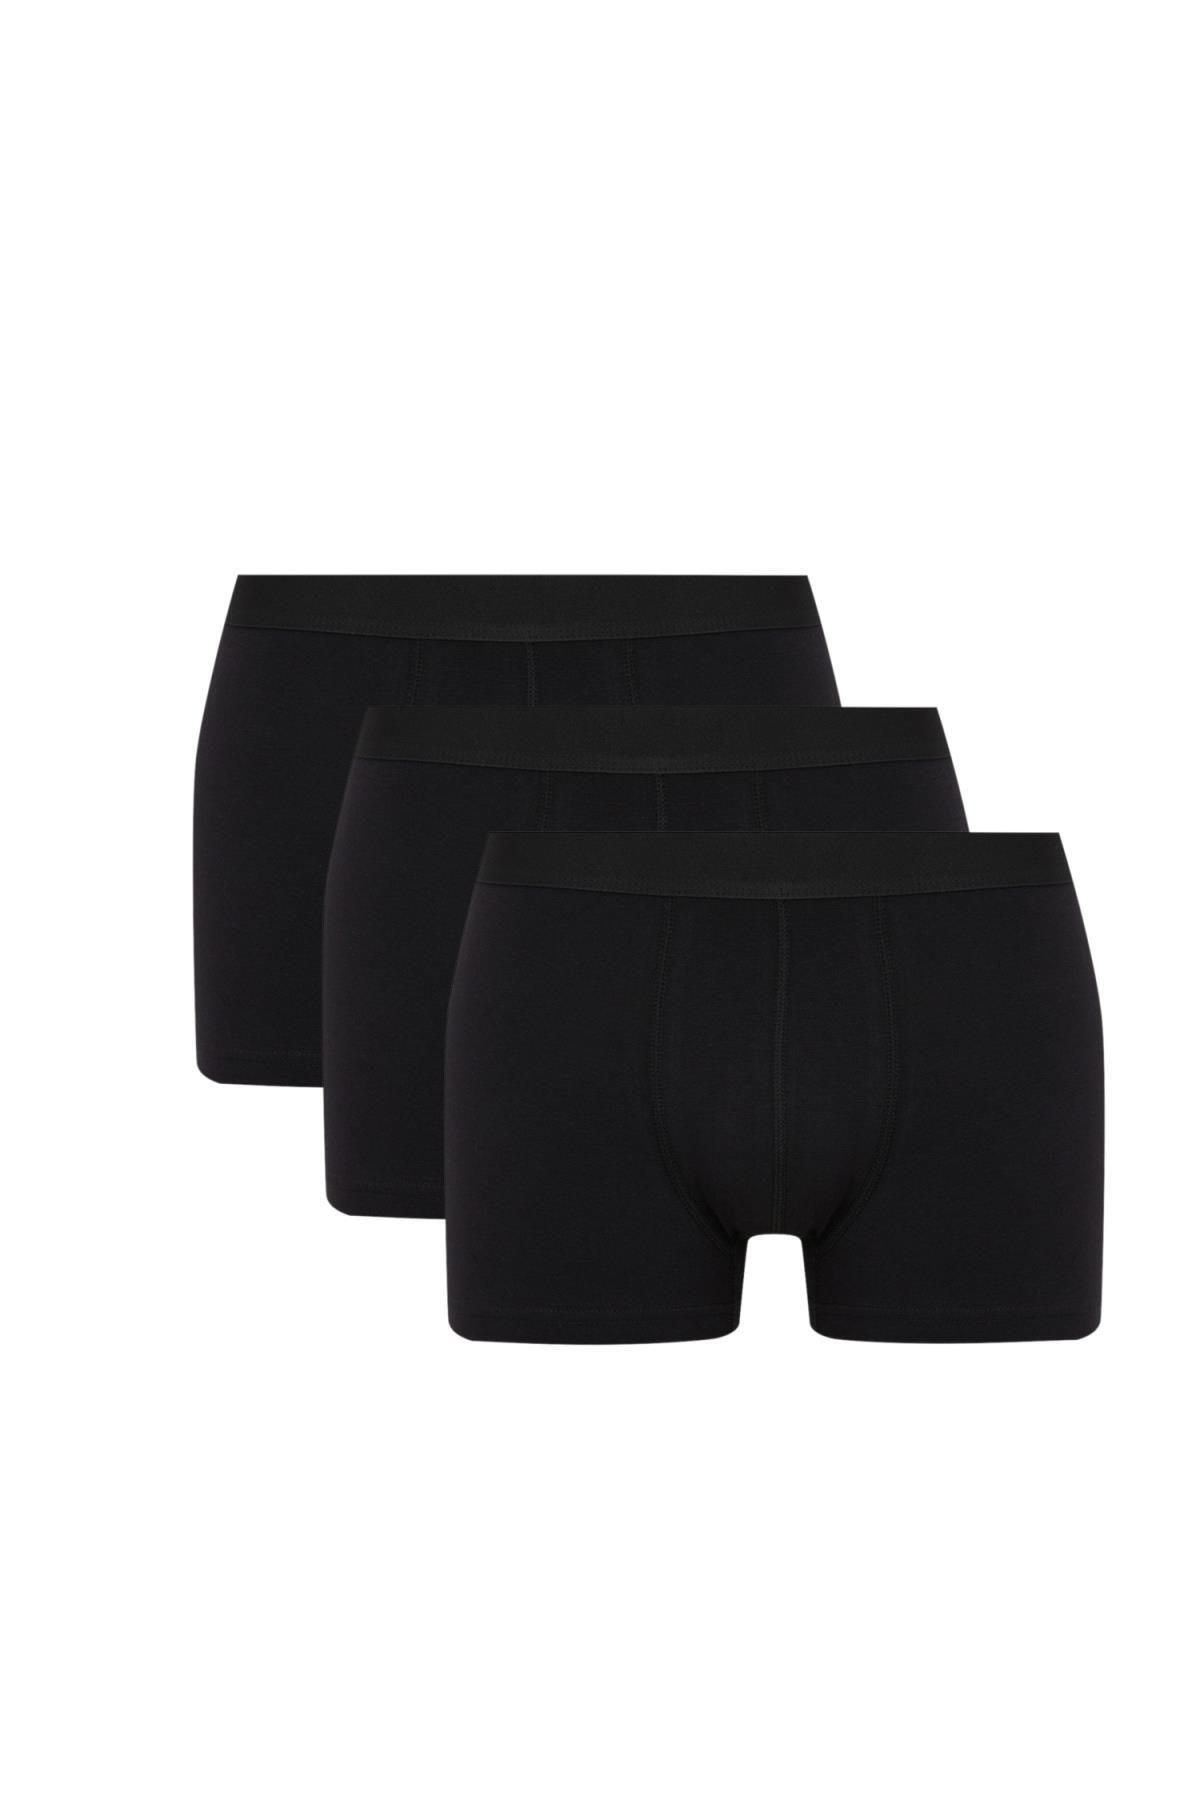 socksbox Men's Winter Thermal Suit Underwear/plain Black/flexible